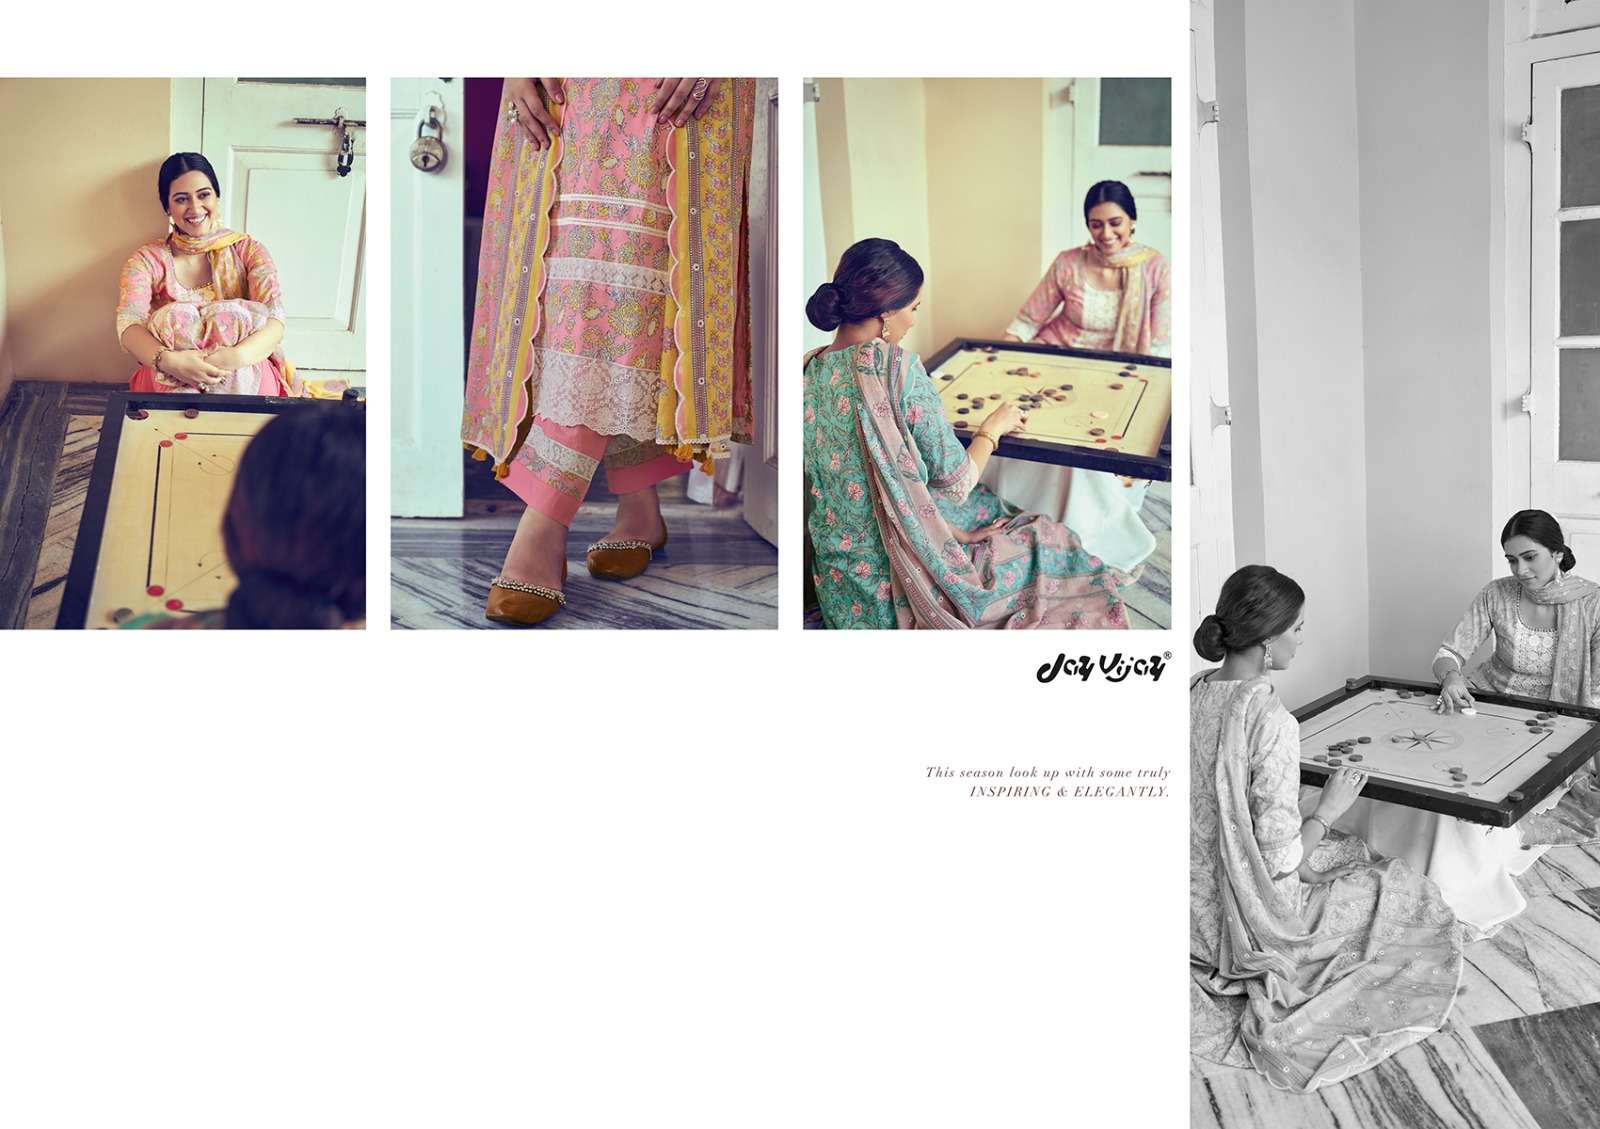 jayvijay dilreet vol-2 8201-8208 series pure cotton designer salwar suits online dealer surat